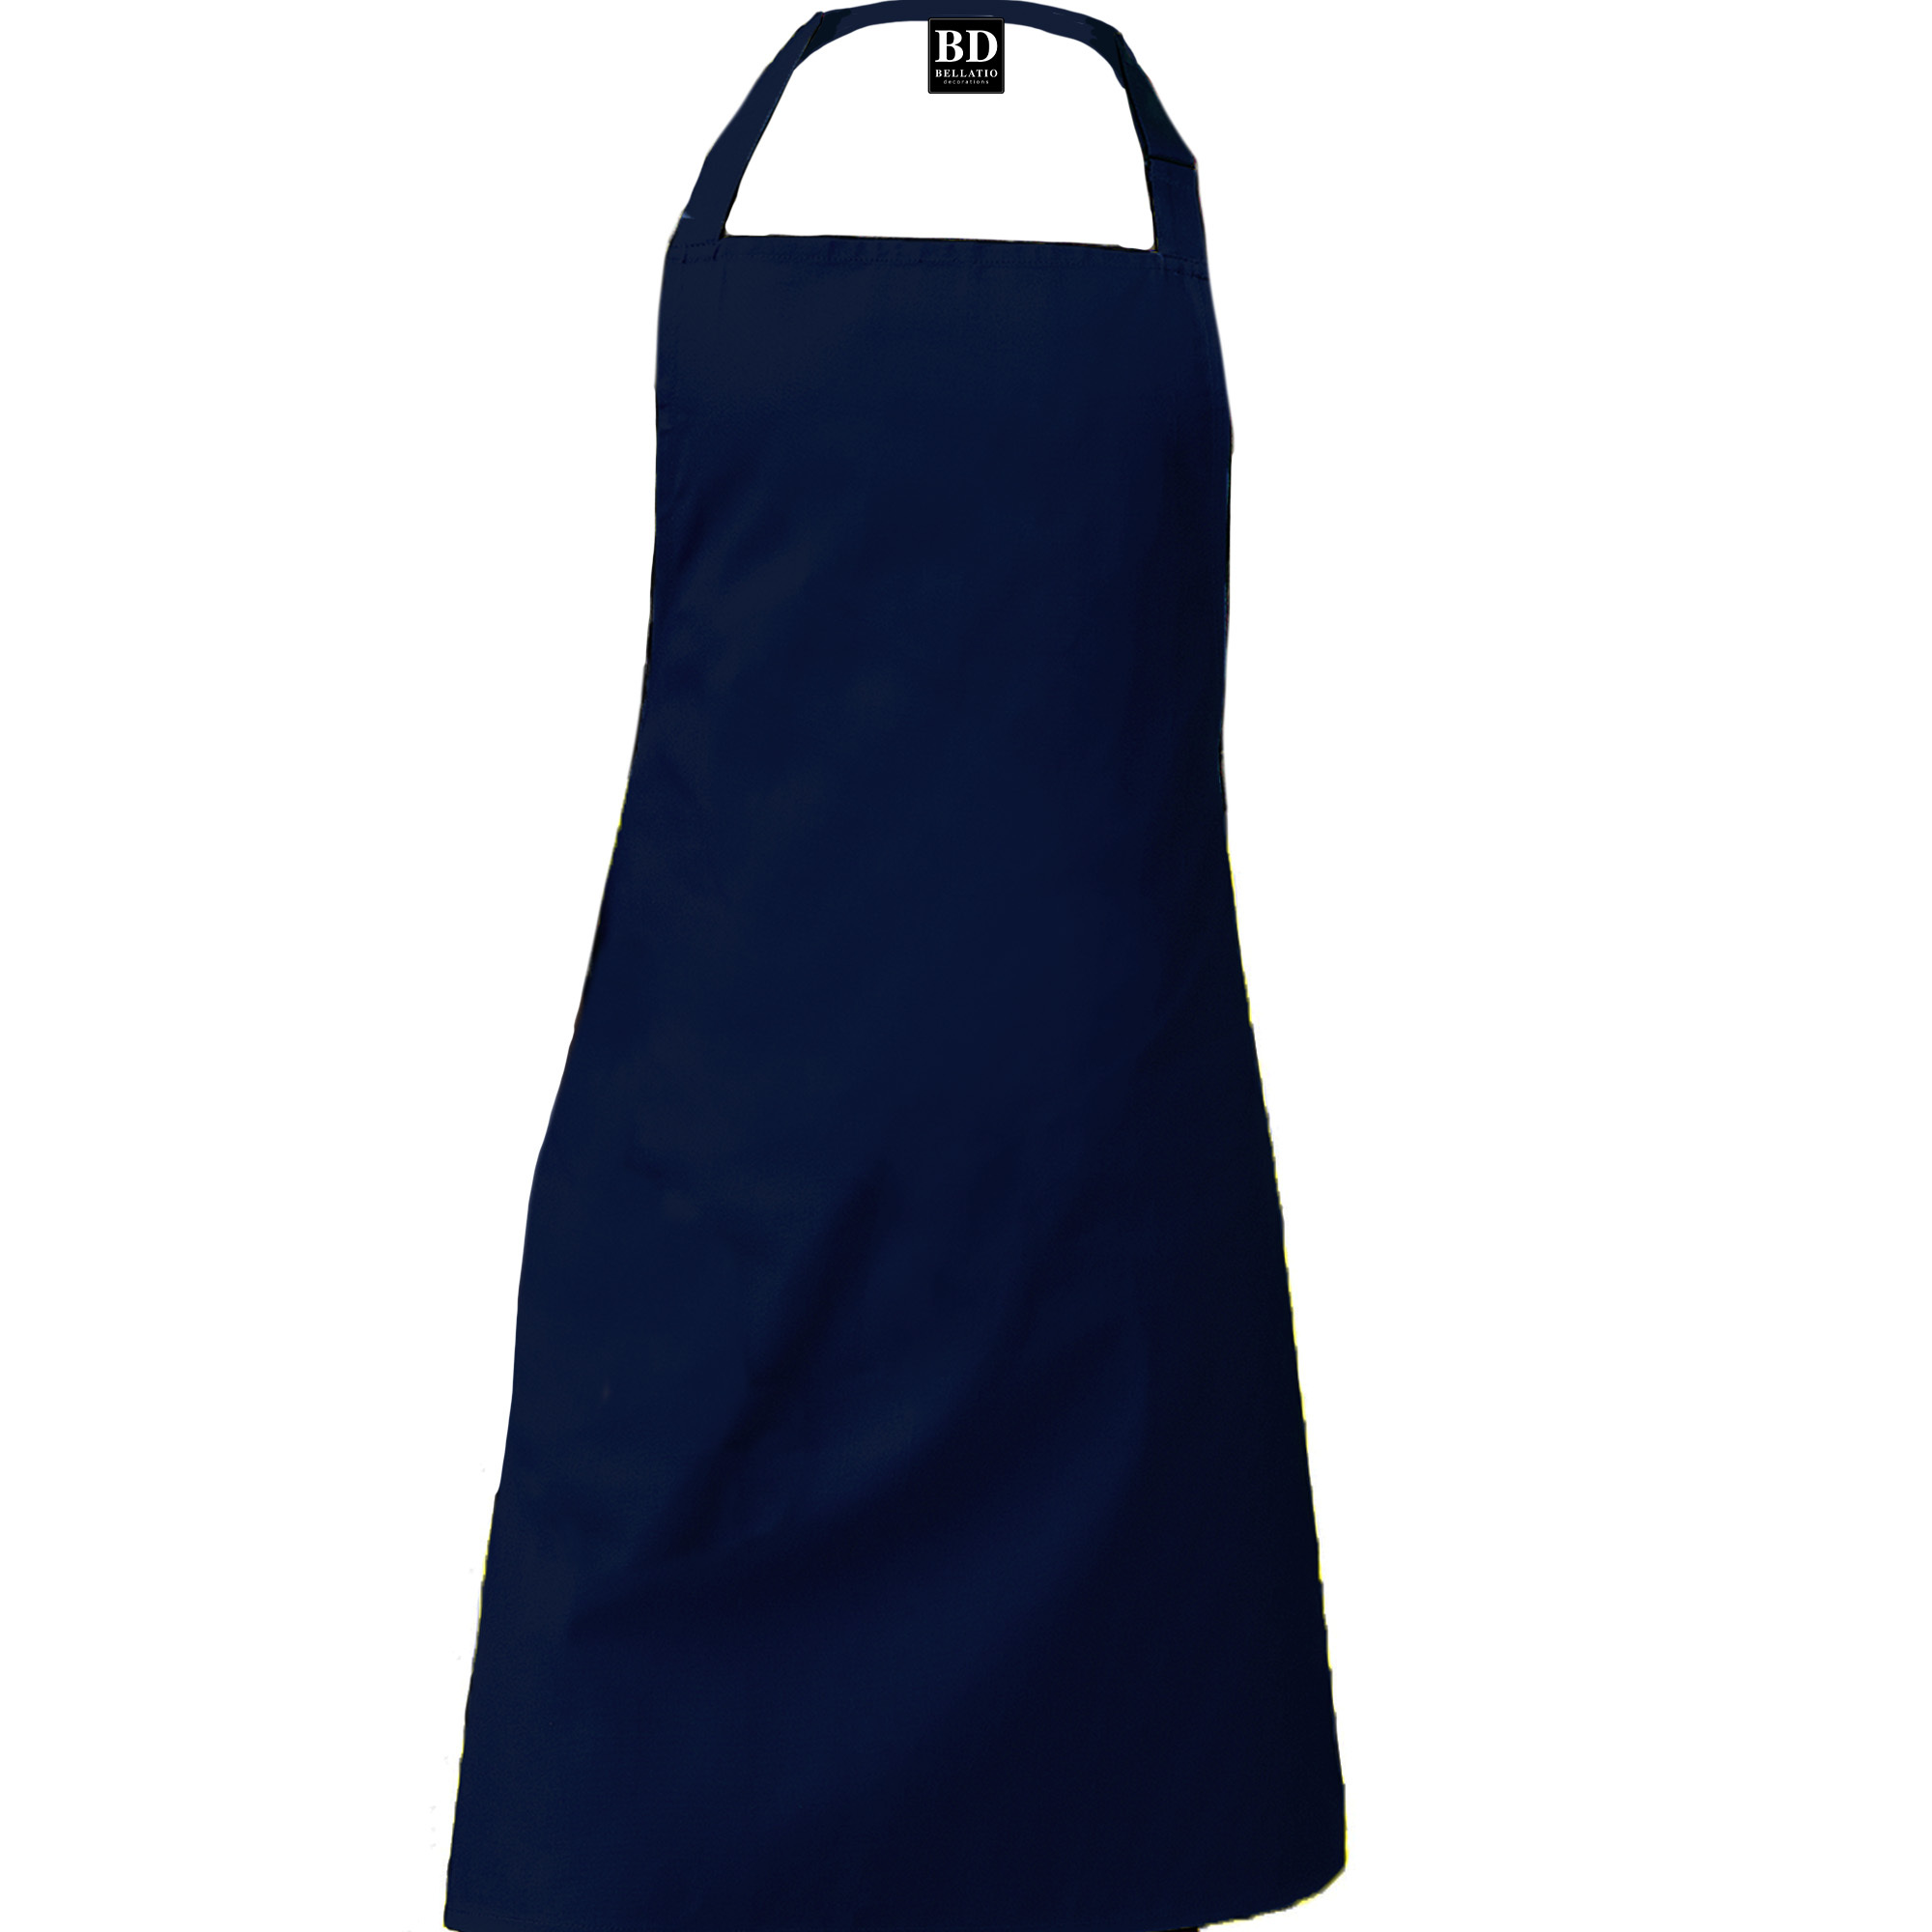 Master chef apron navy blue for men